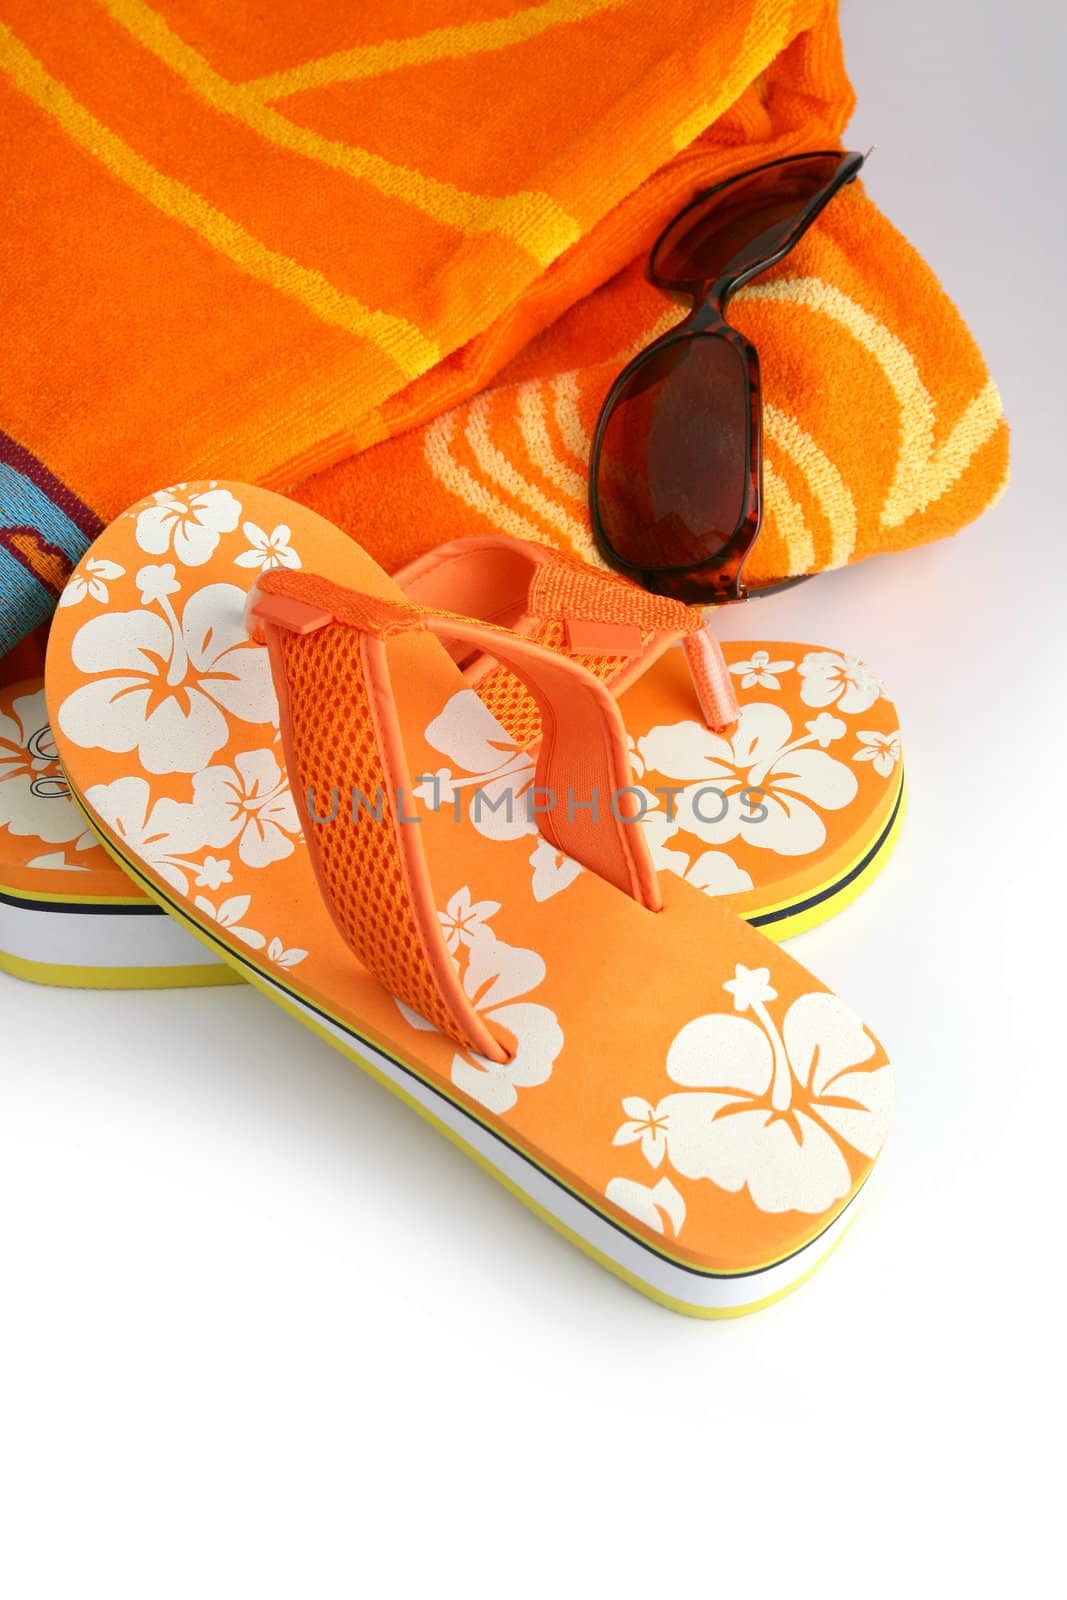 Flip-flops, sunglasses and towel by phovoir